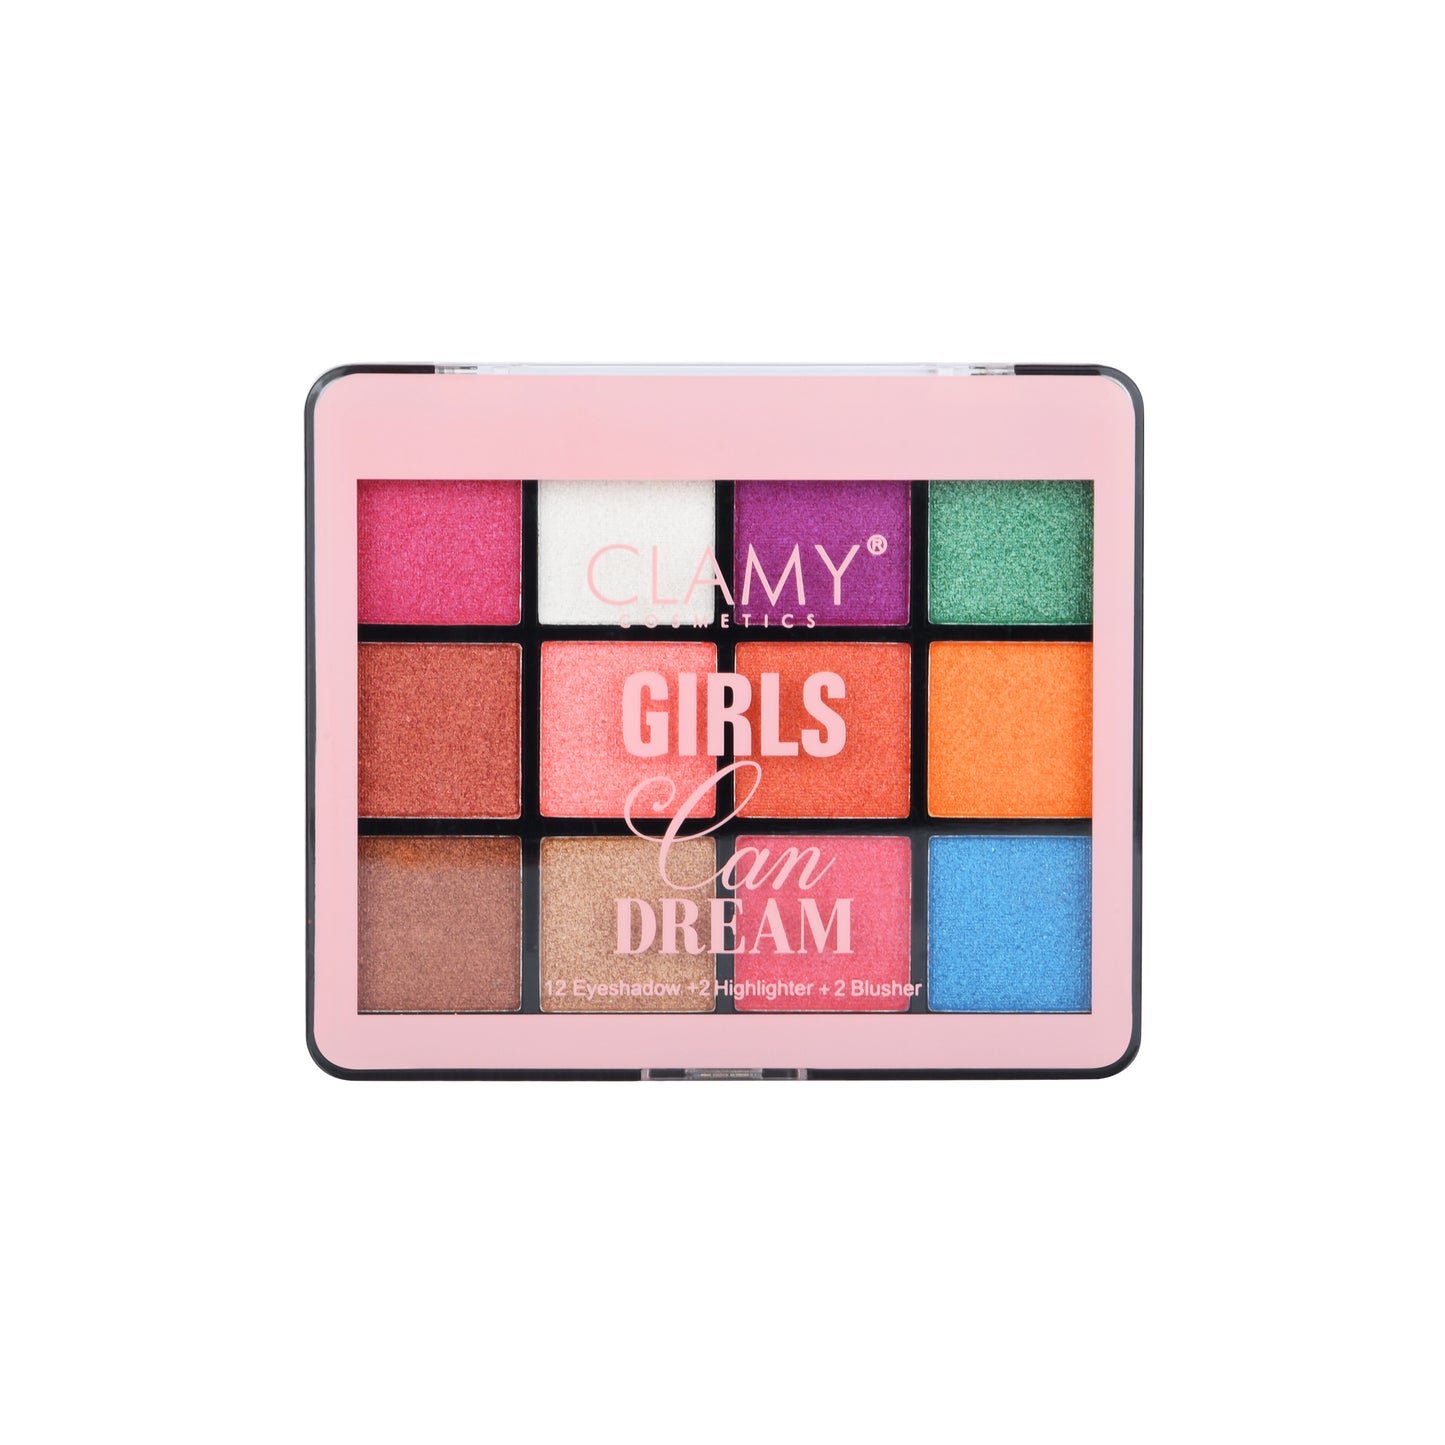 Girls Can Dream Makeup palette| 12 Shimmery Eyeshadow+2 Shimmery Highlighter+ 2 Matte Blusher+1 Applicator- 30g